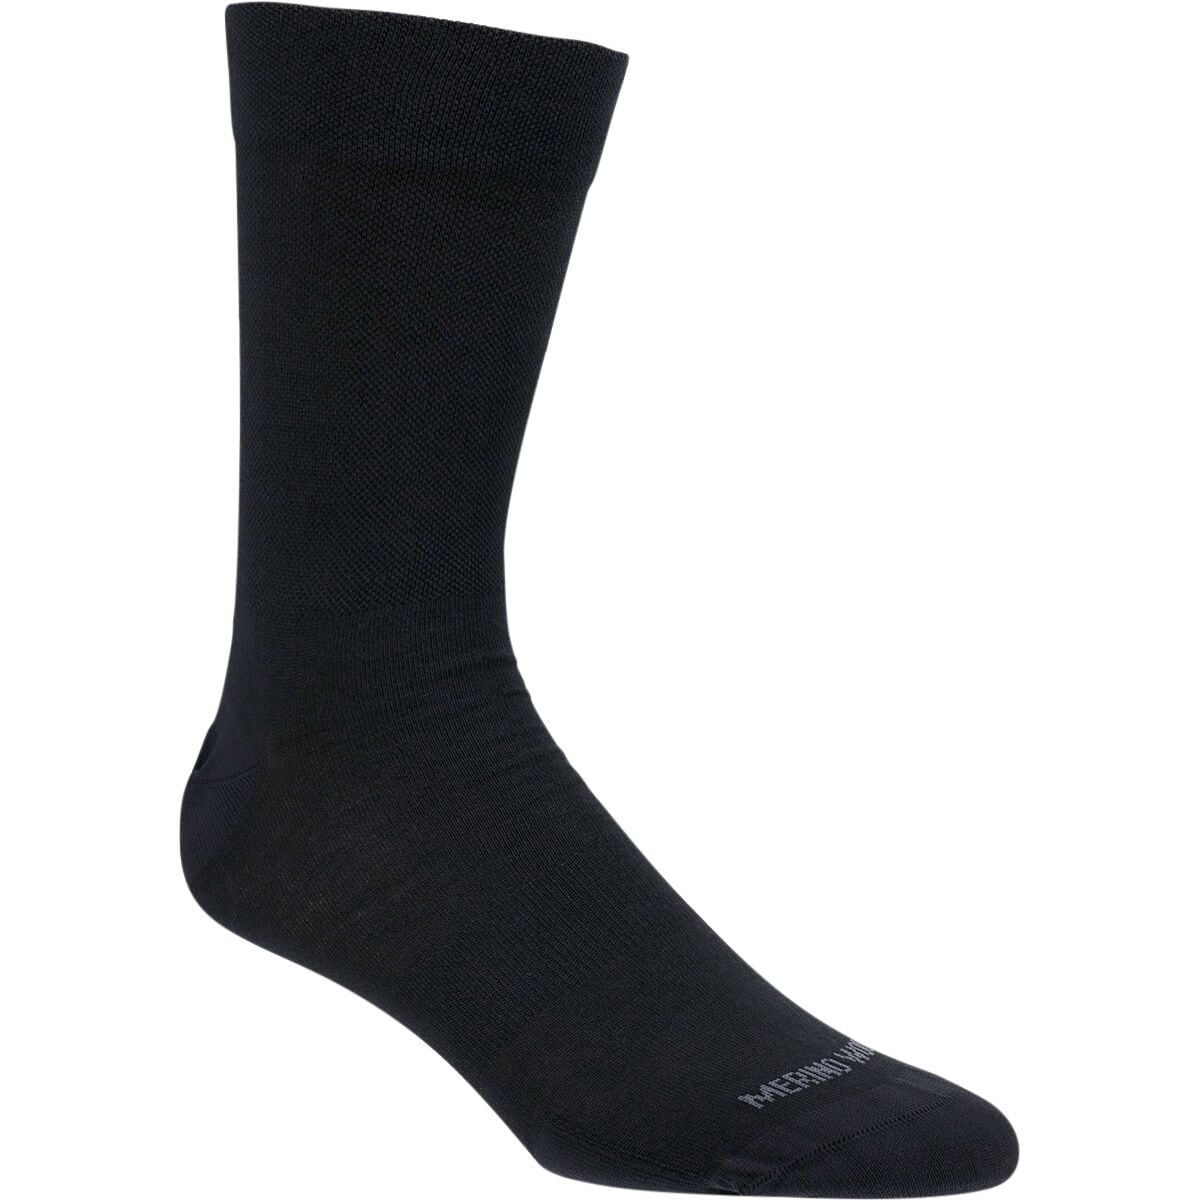 Sportful Matchy Wool Sock - Men's